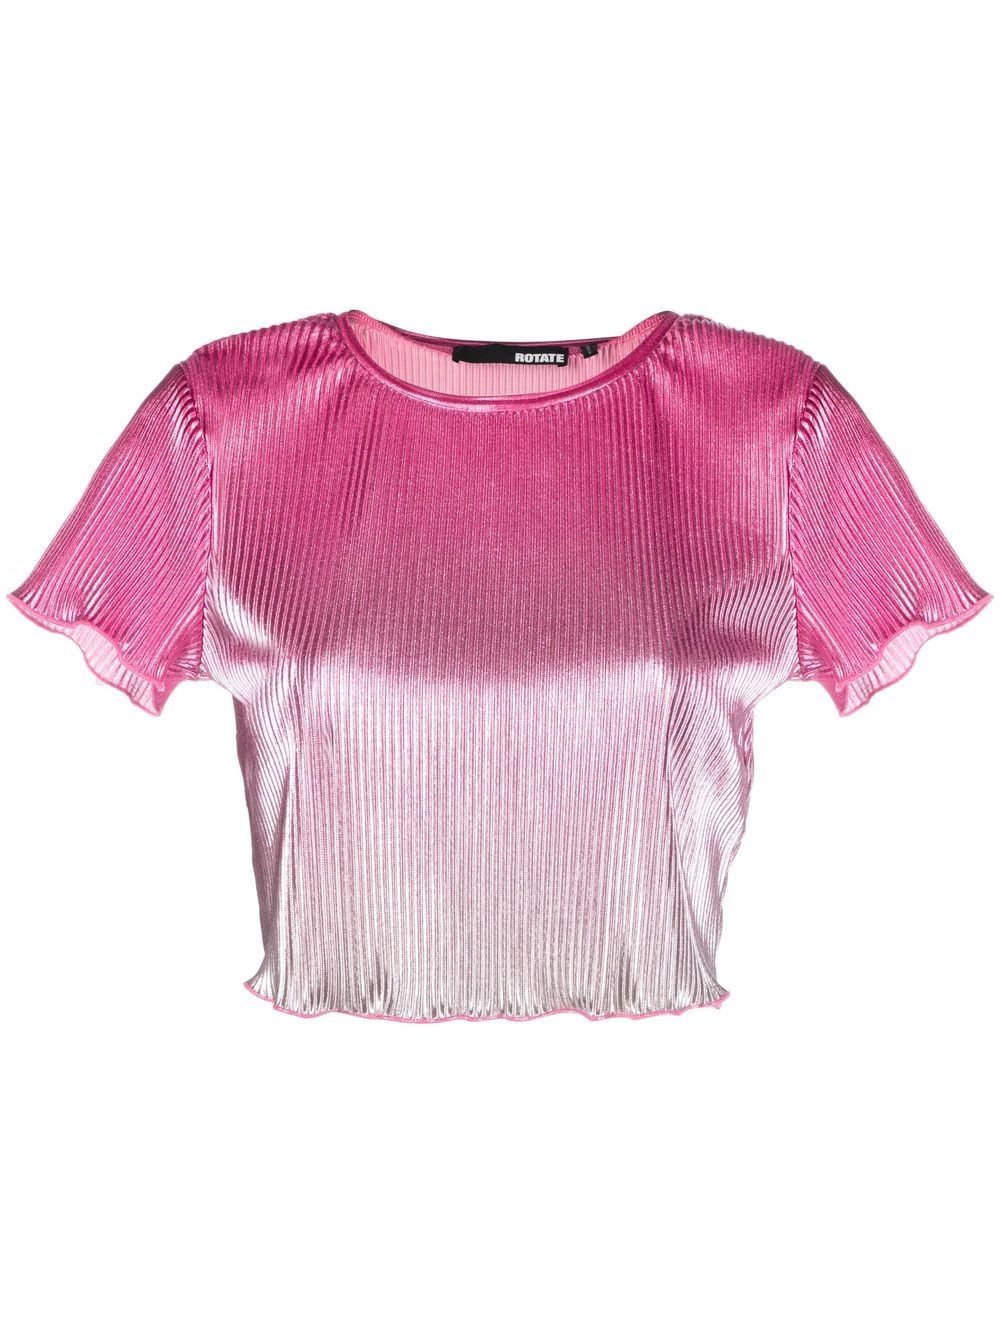 ROTATE gradient effect short sleeves top - Pink